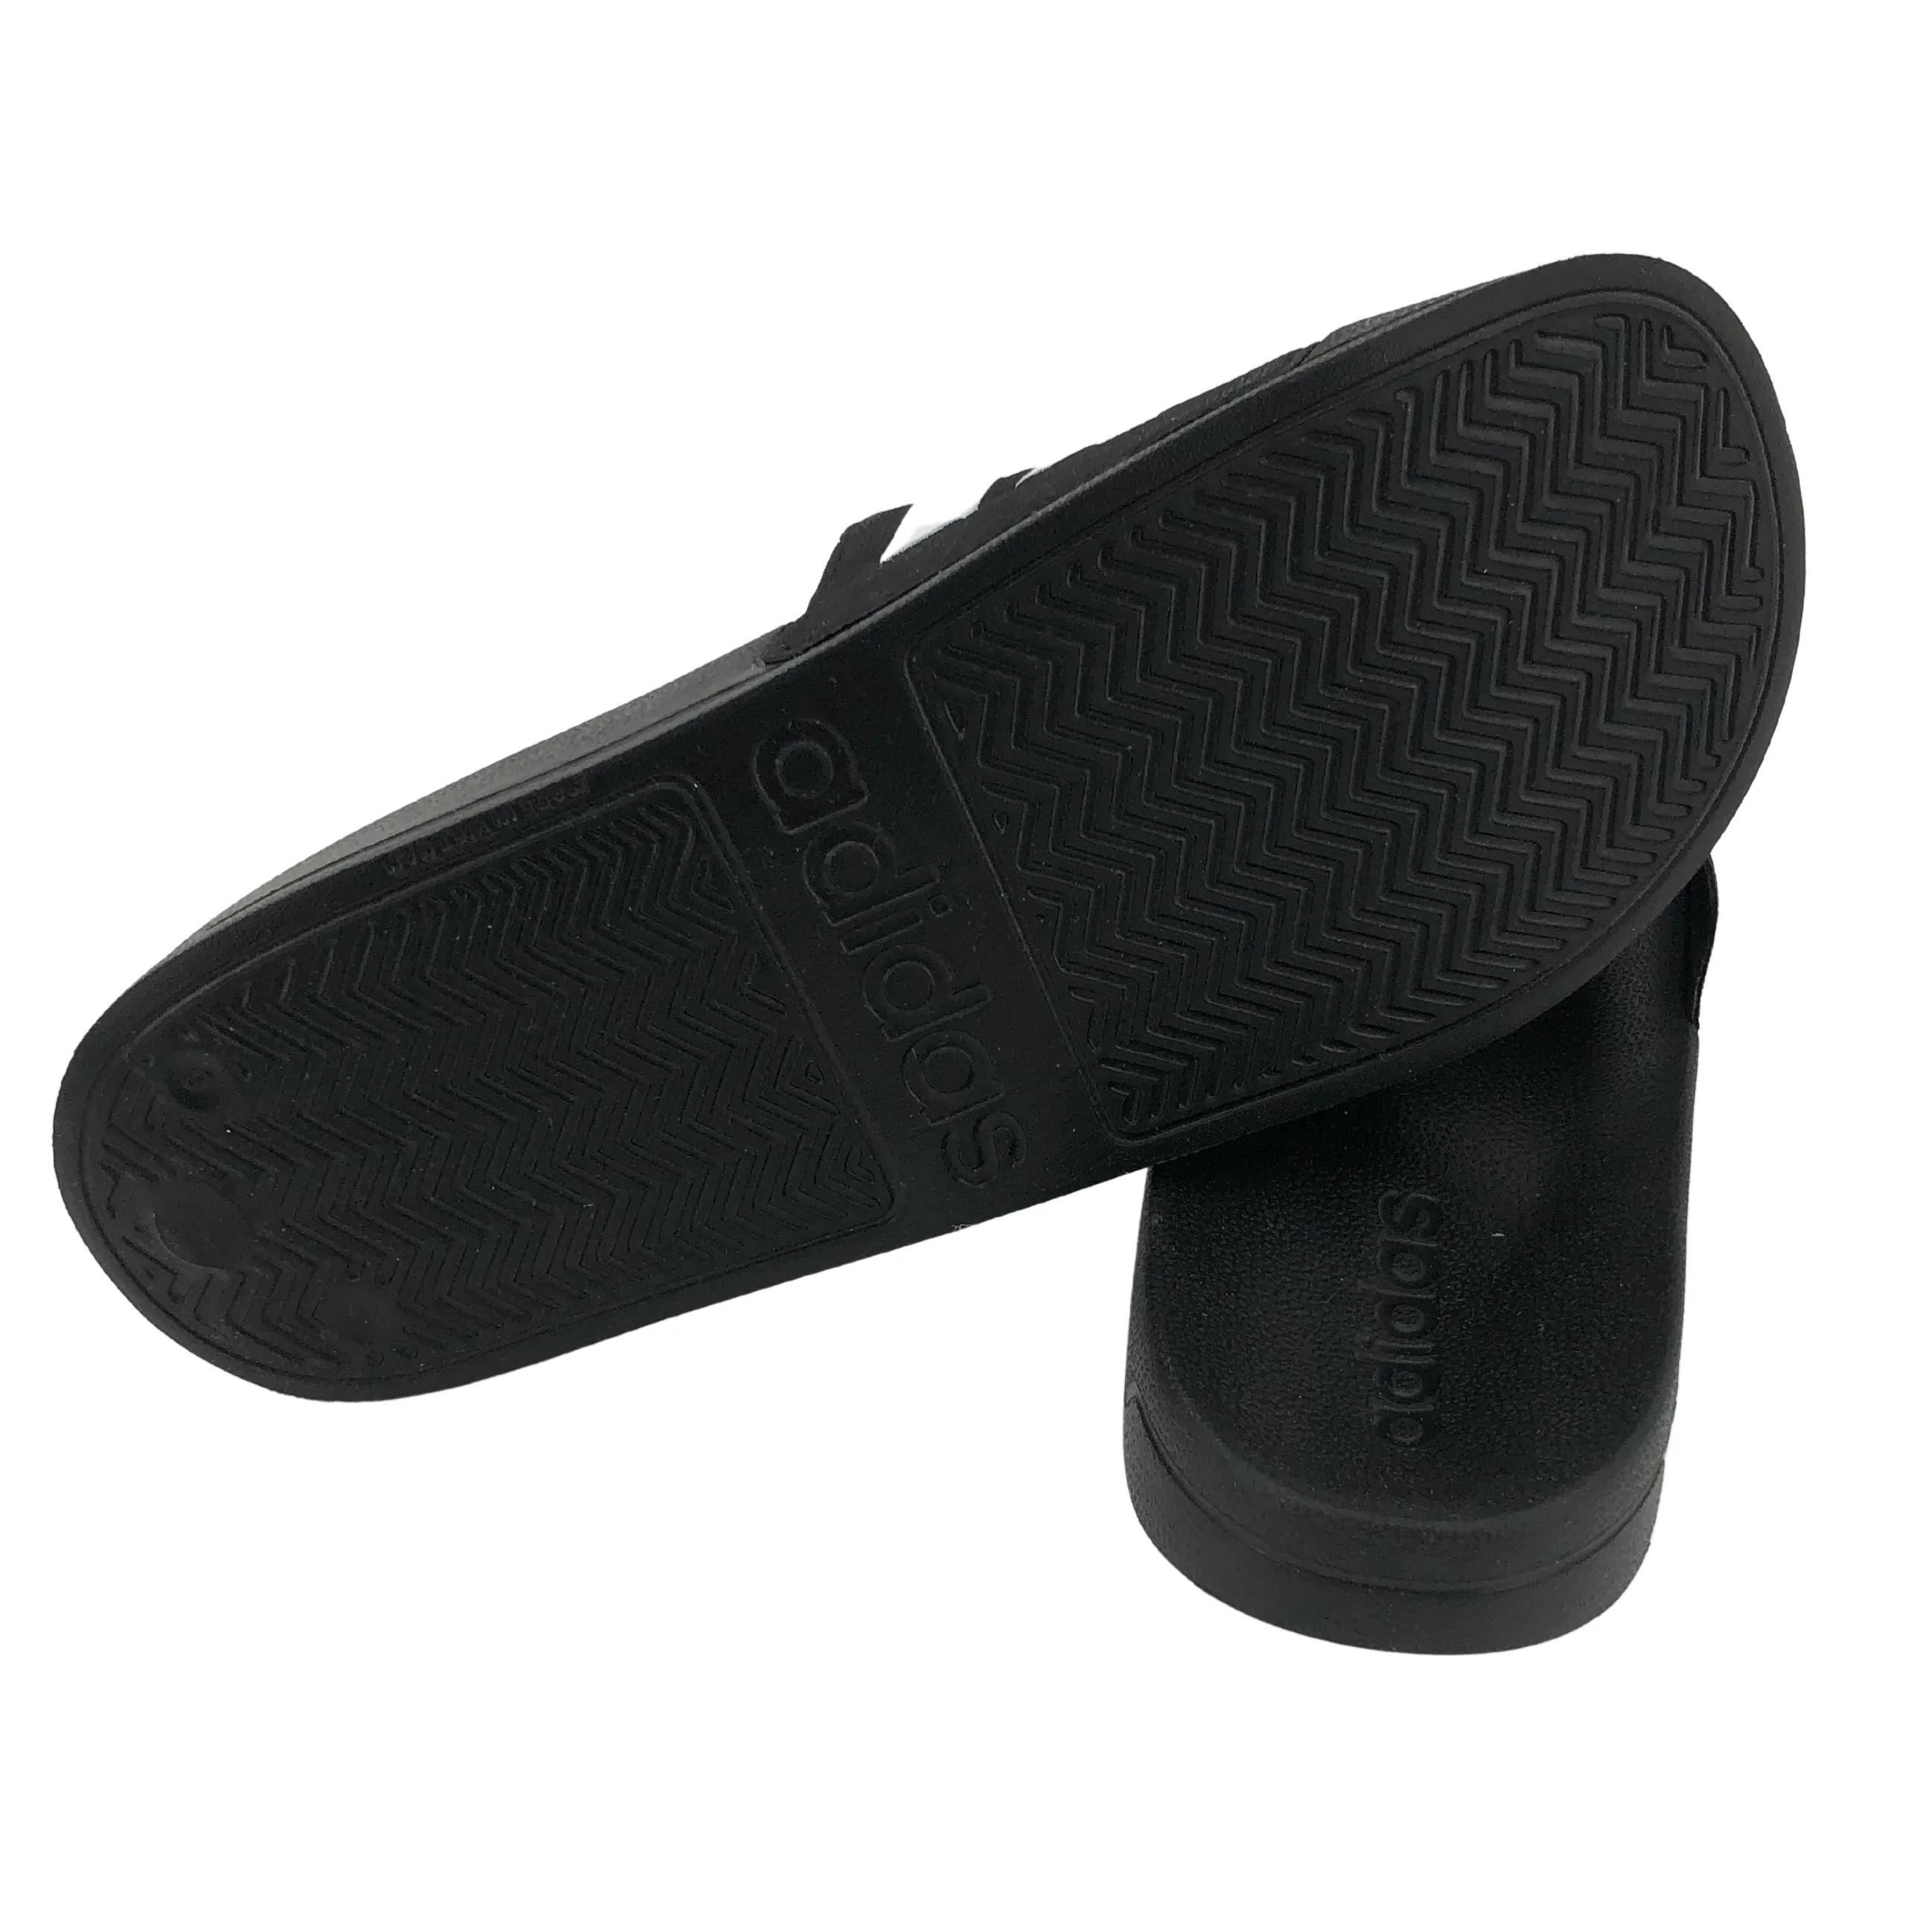 Adidas: Adilette Sandals / Shower Slides / Black with Classic White Stripes / Slip On / Size 7Adidas: Adilette Sandals / Shower Slides / Black with Classic White Stripes / Slip On / Size 7